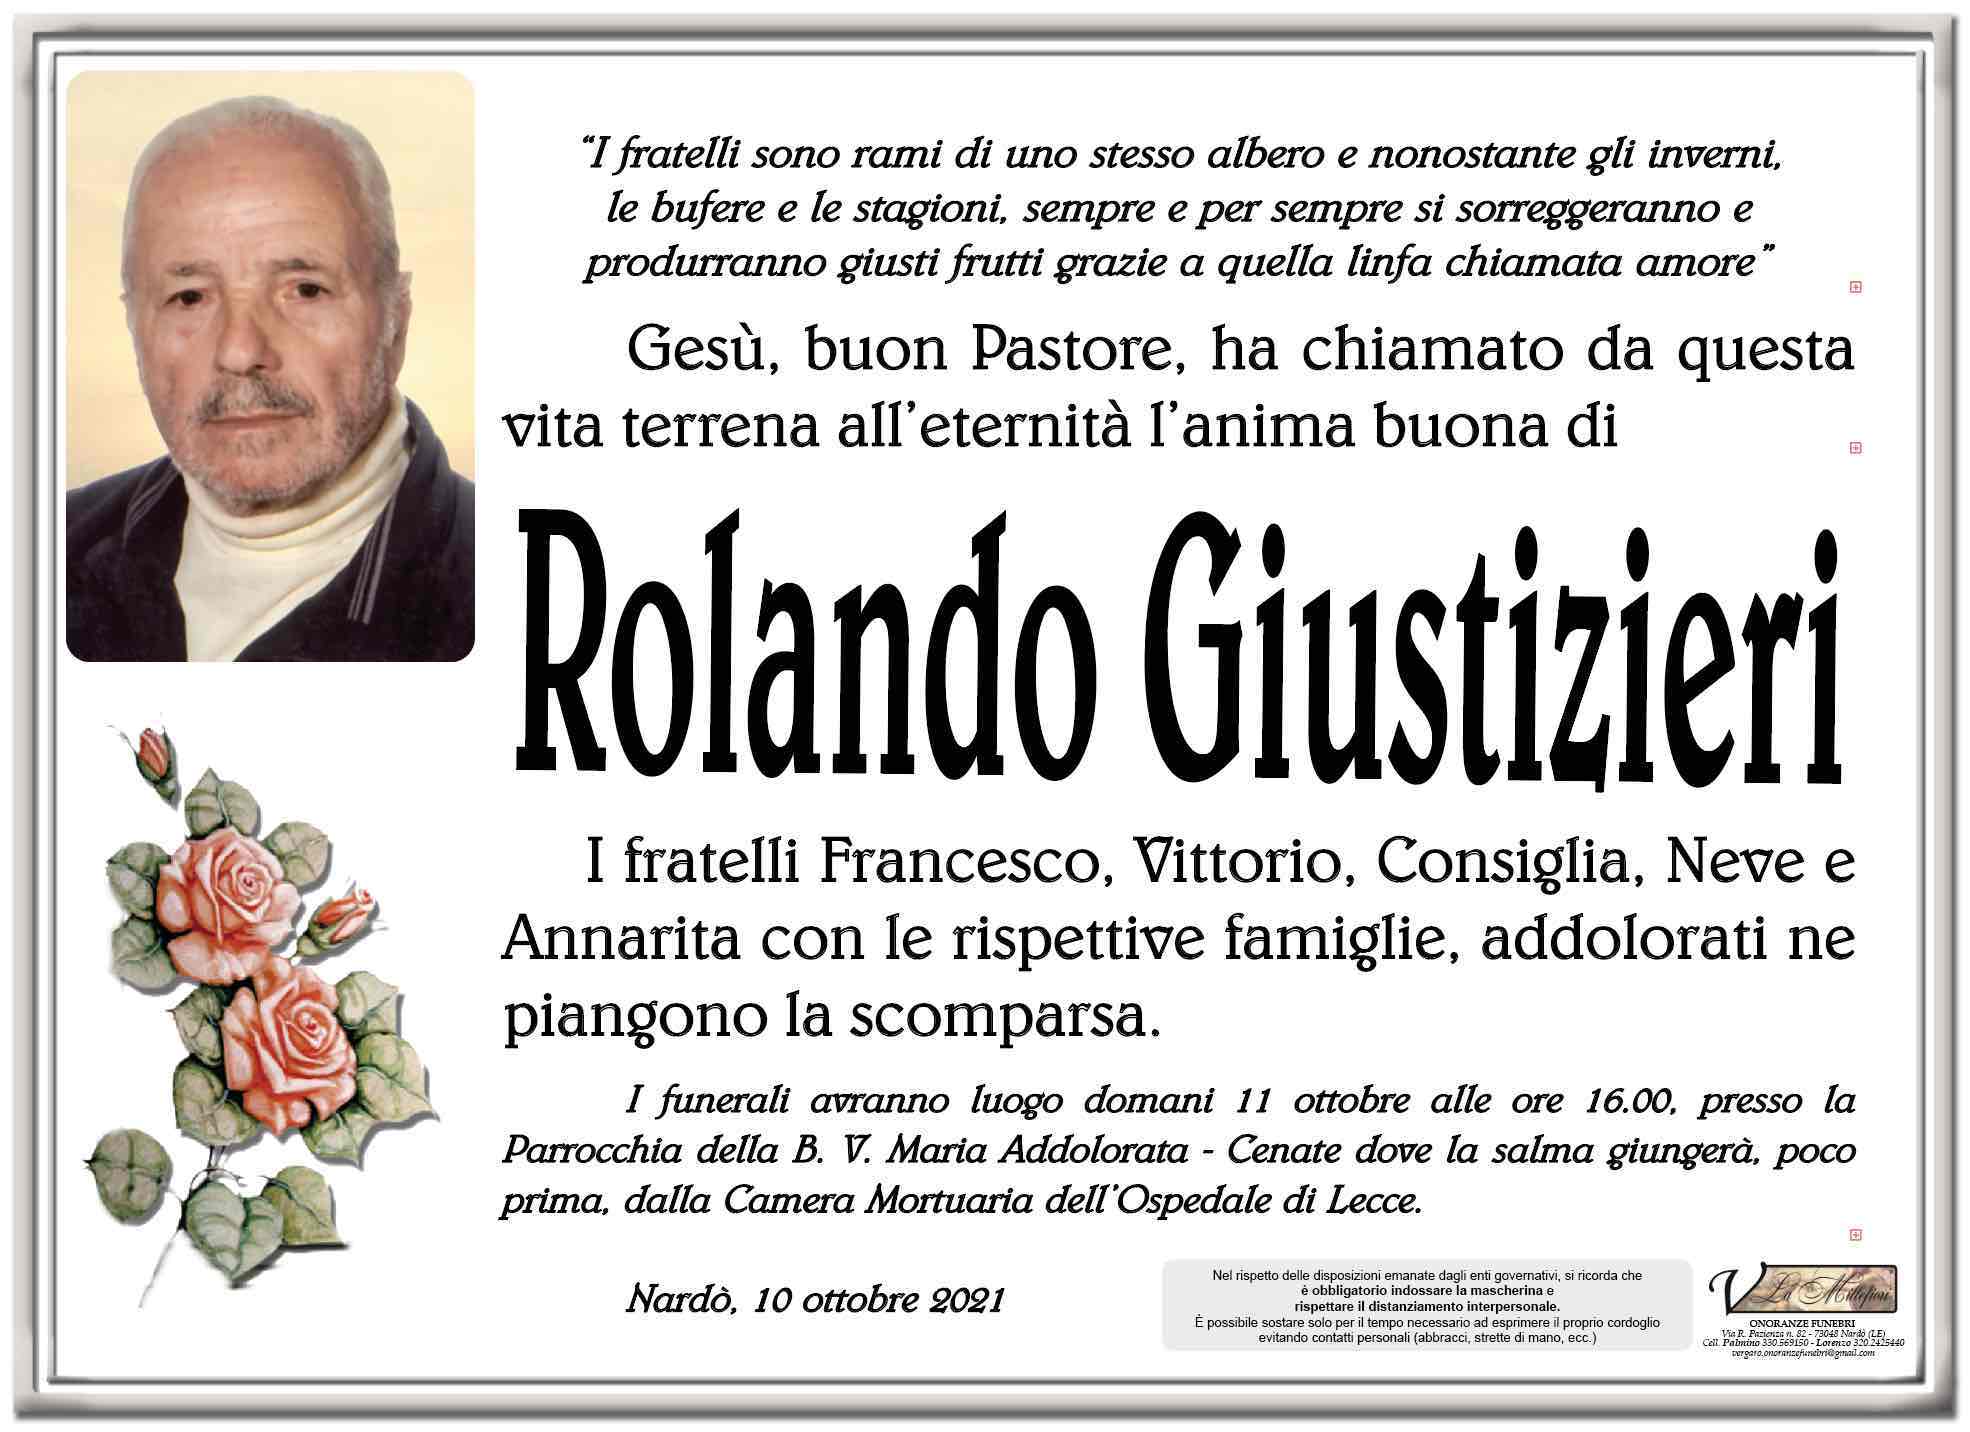 Rolando Giustizieri